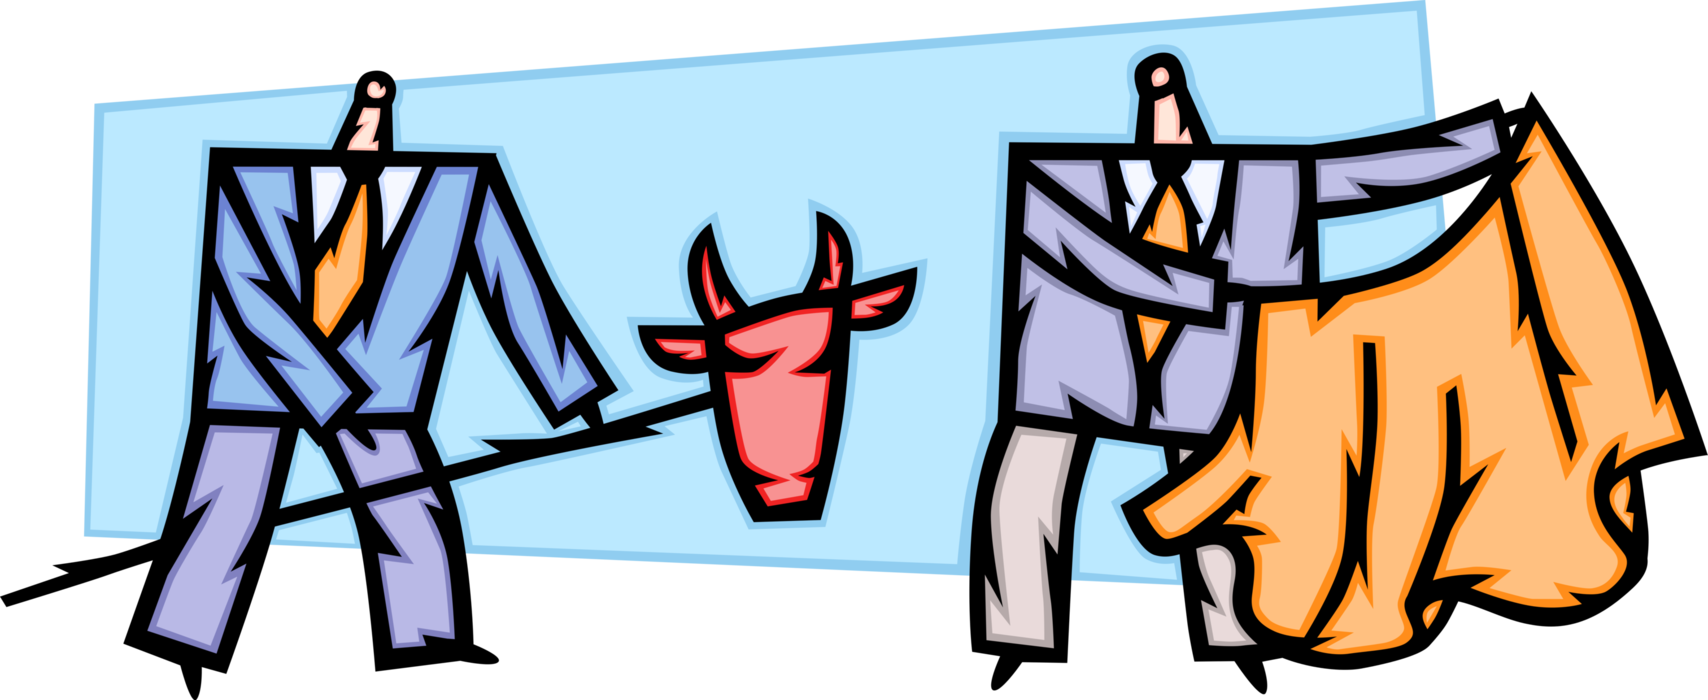 Vector Illustration of Businessmen with Wall Street Bull Stock Market Mask and Toreador Bullfighter Matador Cape